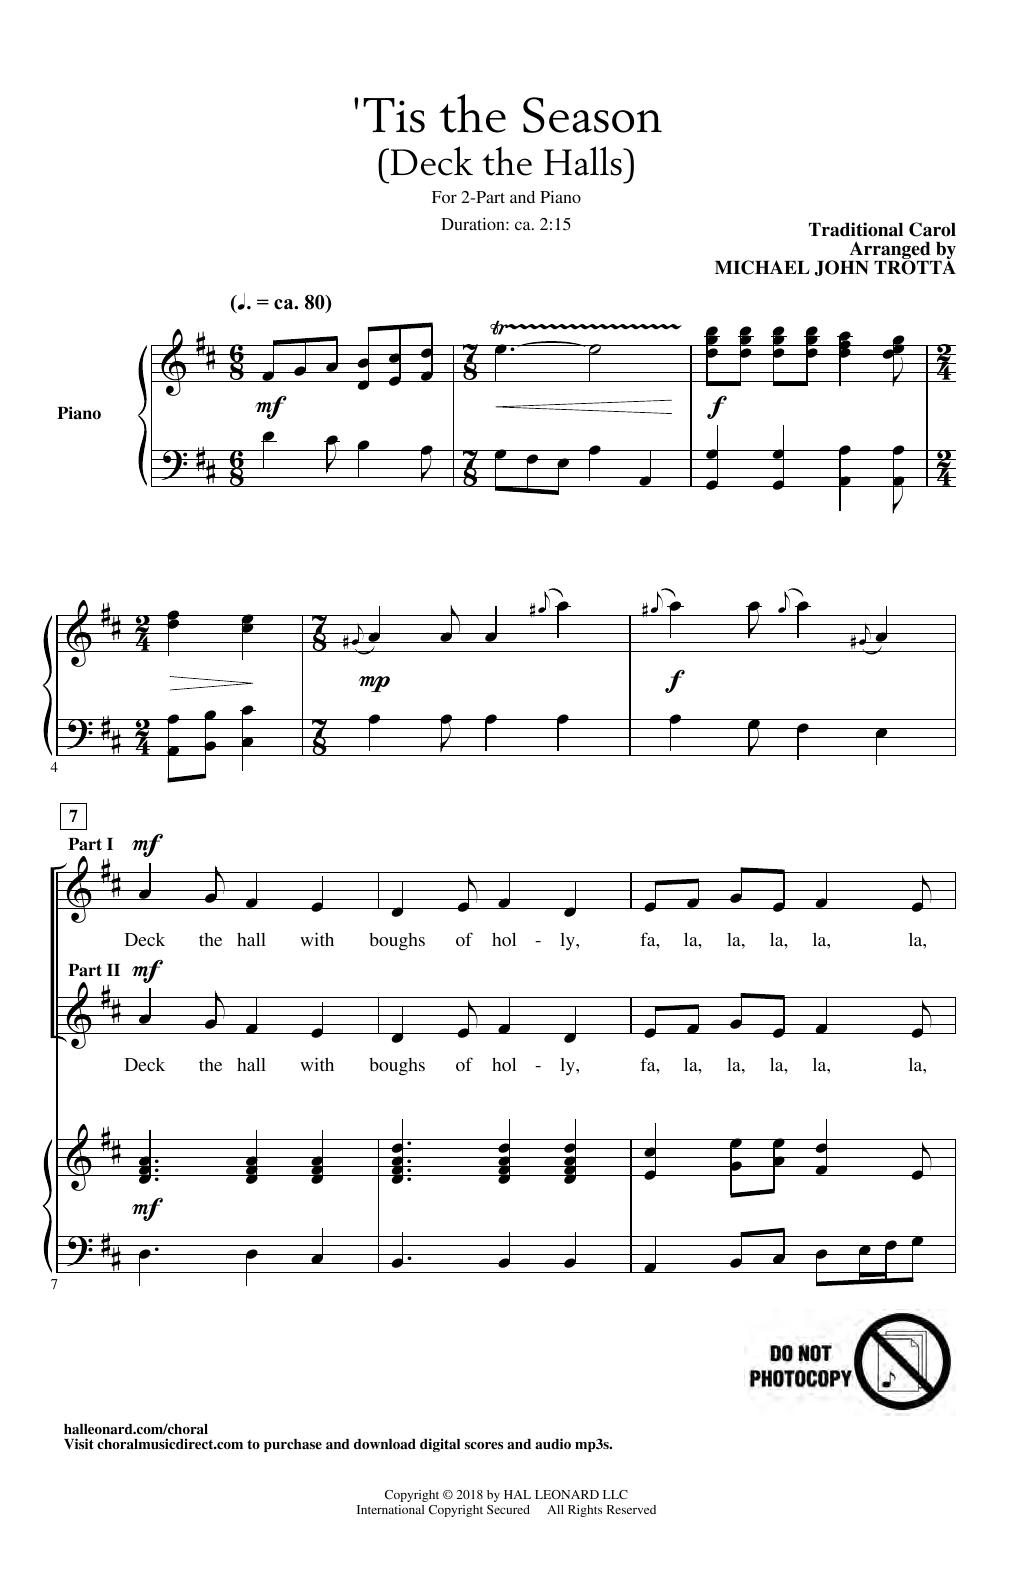 Traditional Carol 'Tis The Season (Deck The Halls) (arr. Michael John Trotta) Sheet Music Notes & Chords for 2-Part Choir - Download or Print PDF